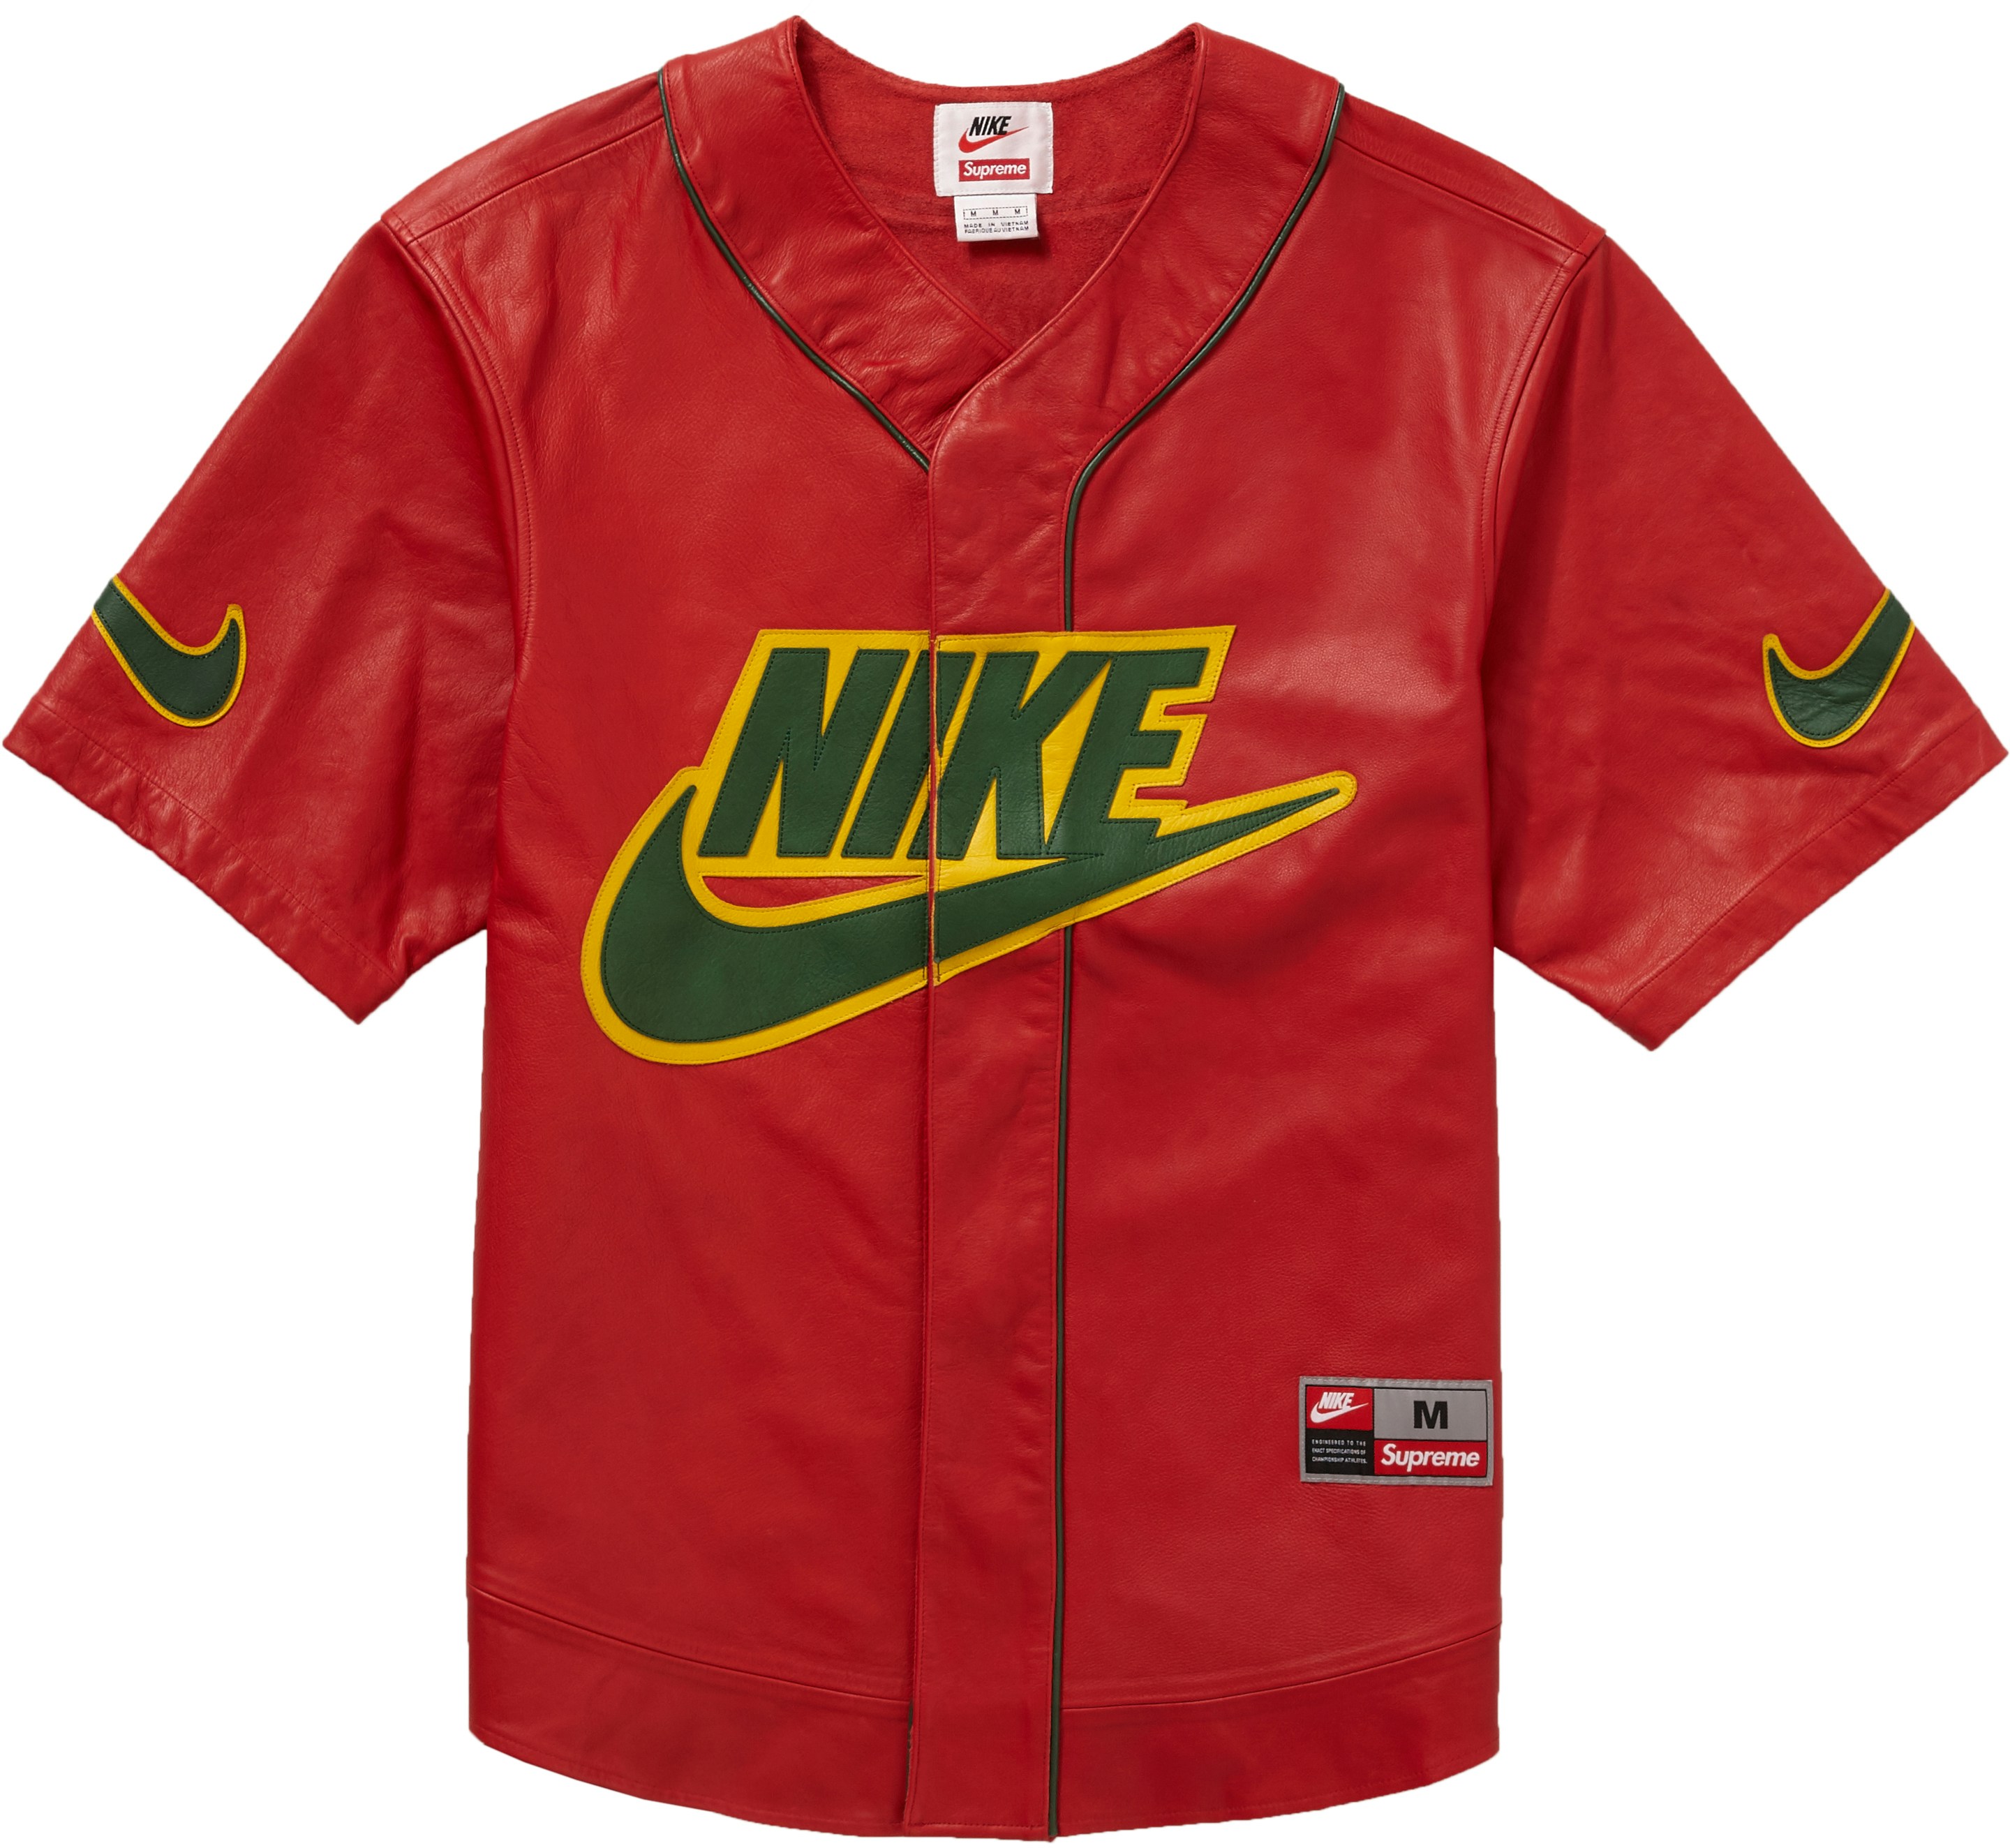 Supreme x Nike Leather Baseball Jersey Red - Novelship